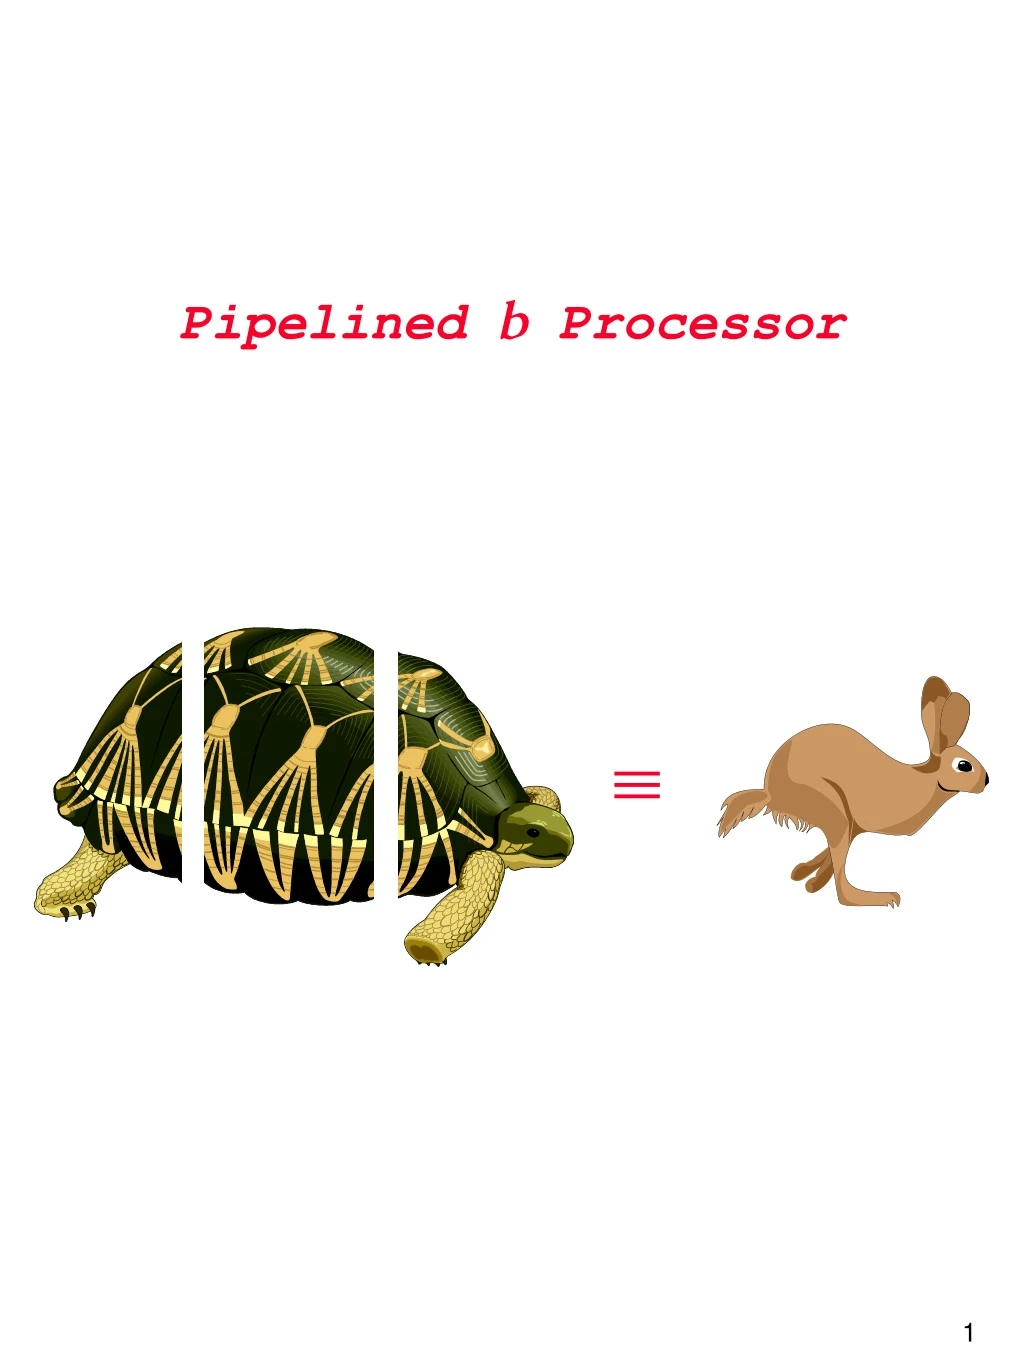 pipelined b processor